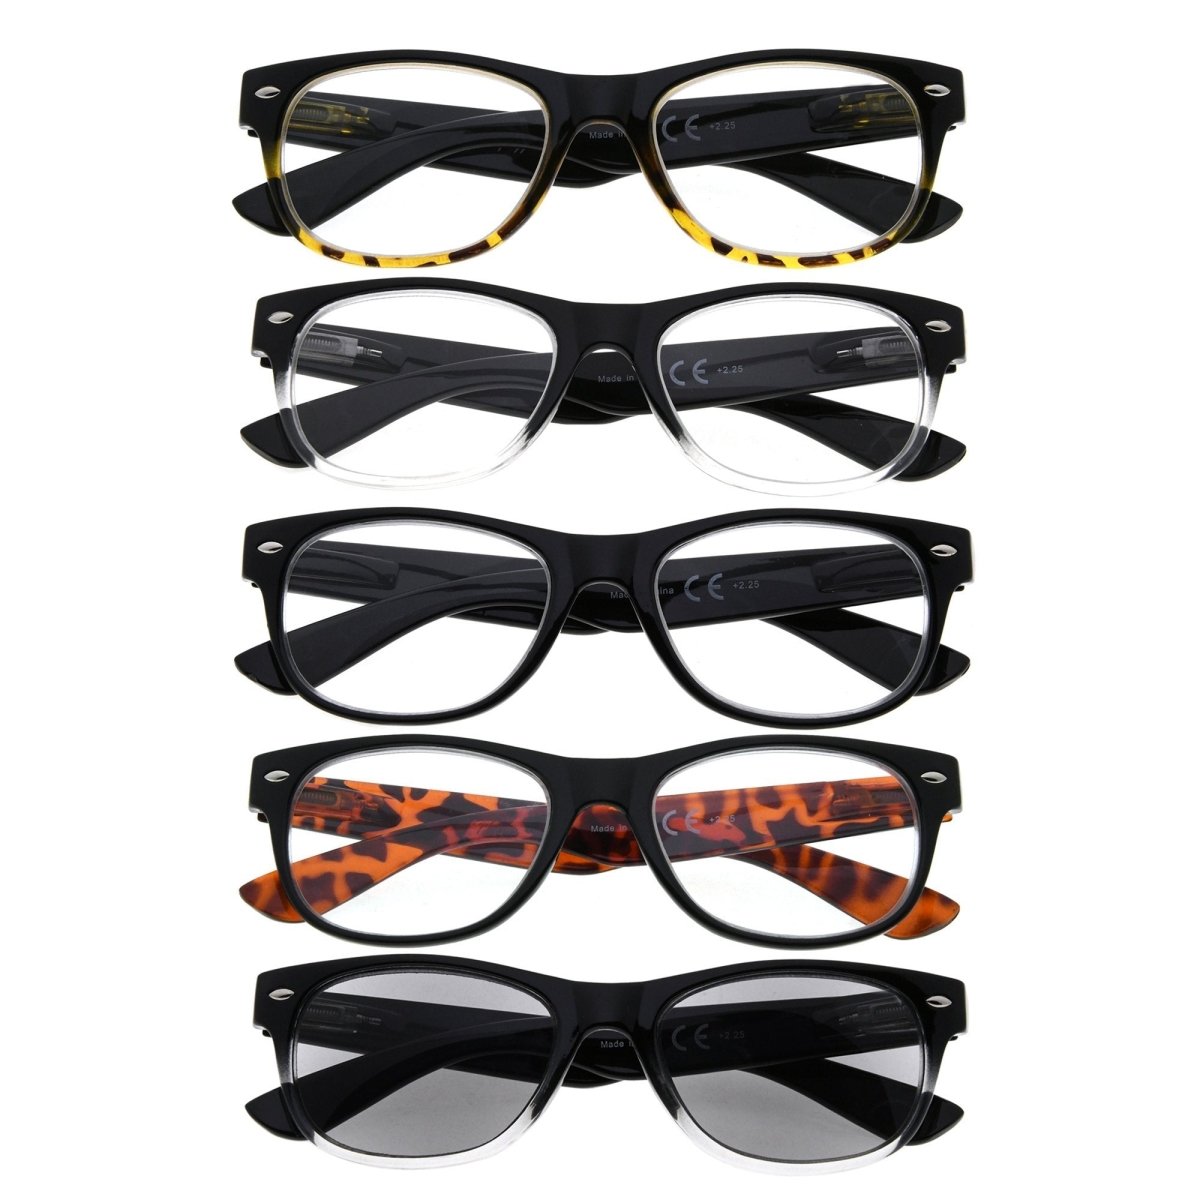 5 Pack Classic 80's Readers Include Sunglasses R011eyekeeper.com